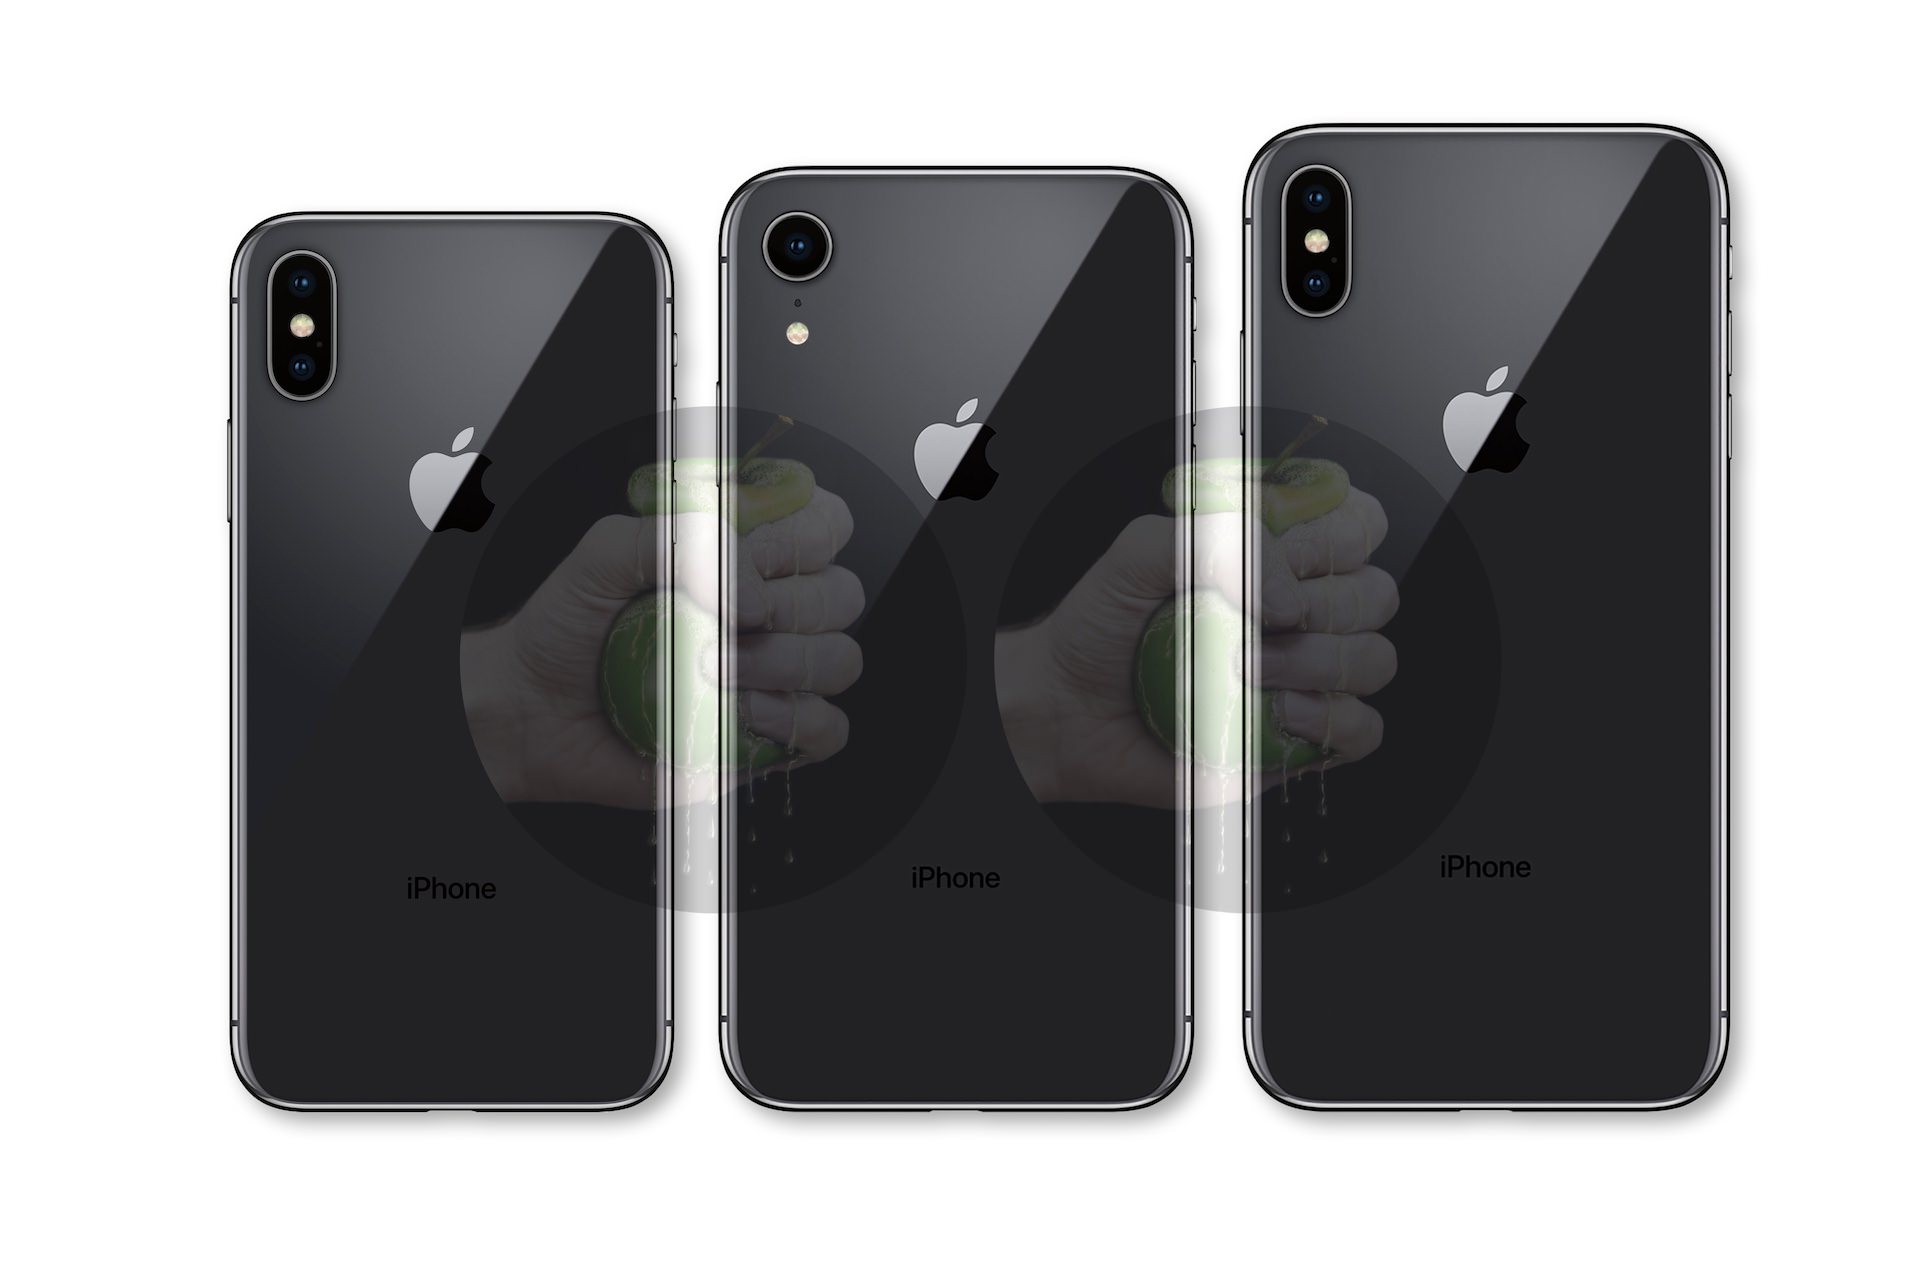 iPhone11、iPhoneX Plus、iPhone9。3種類の画像が出ていますよ。